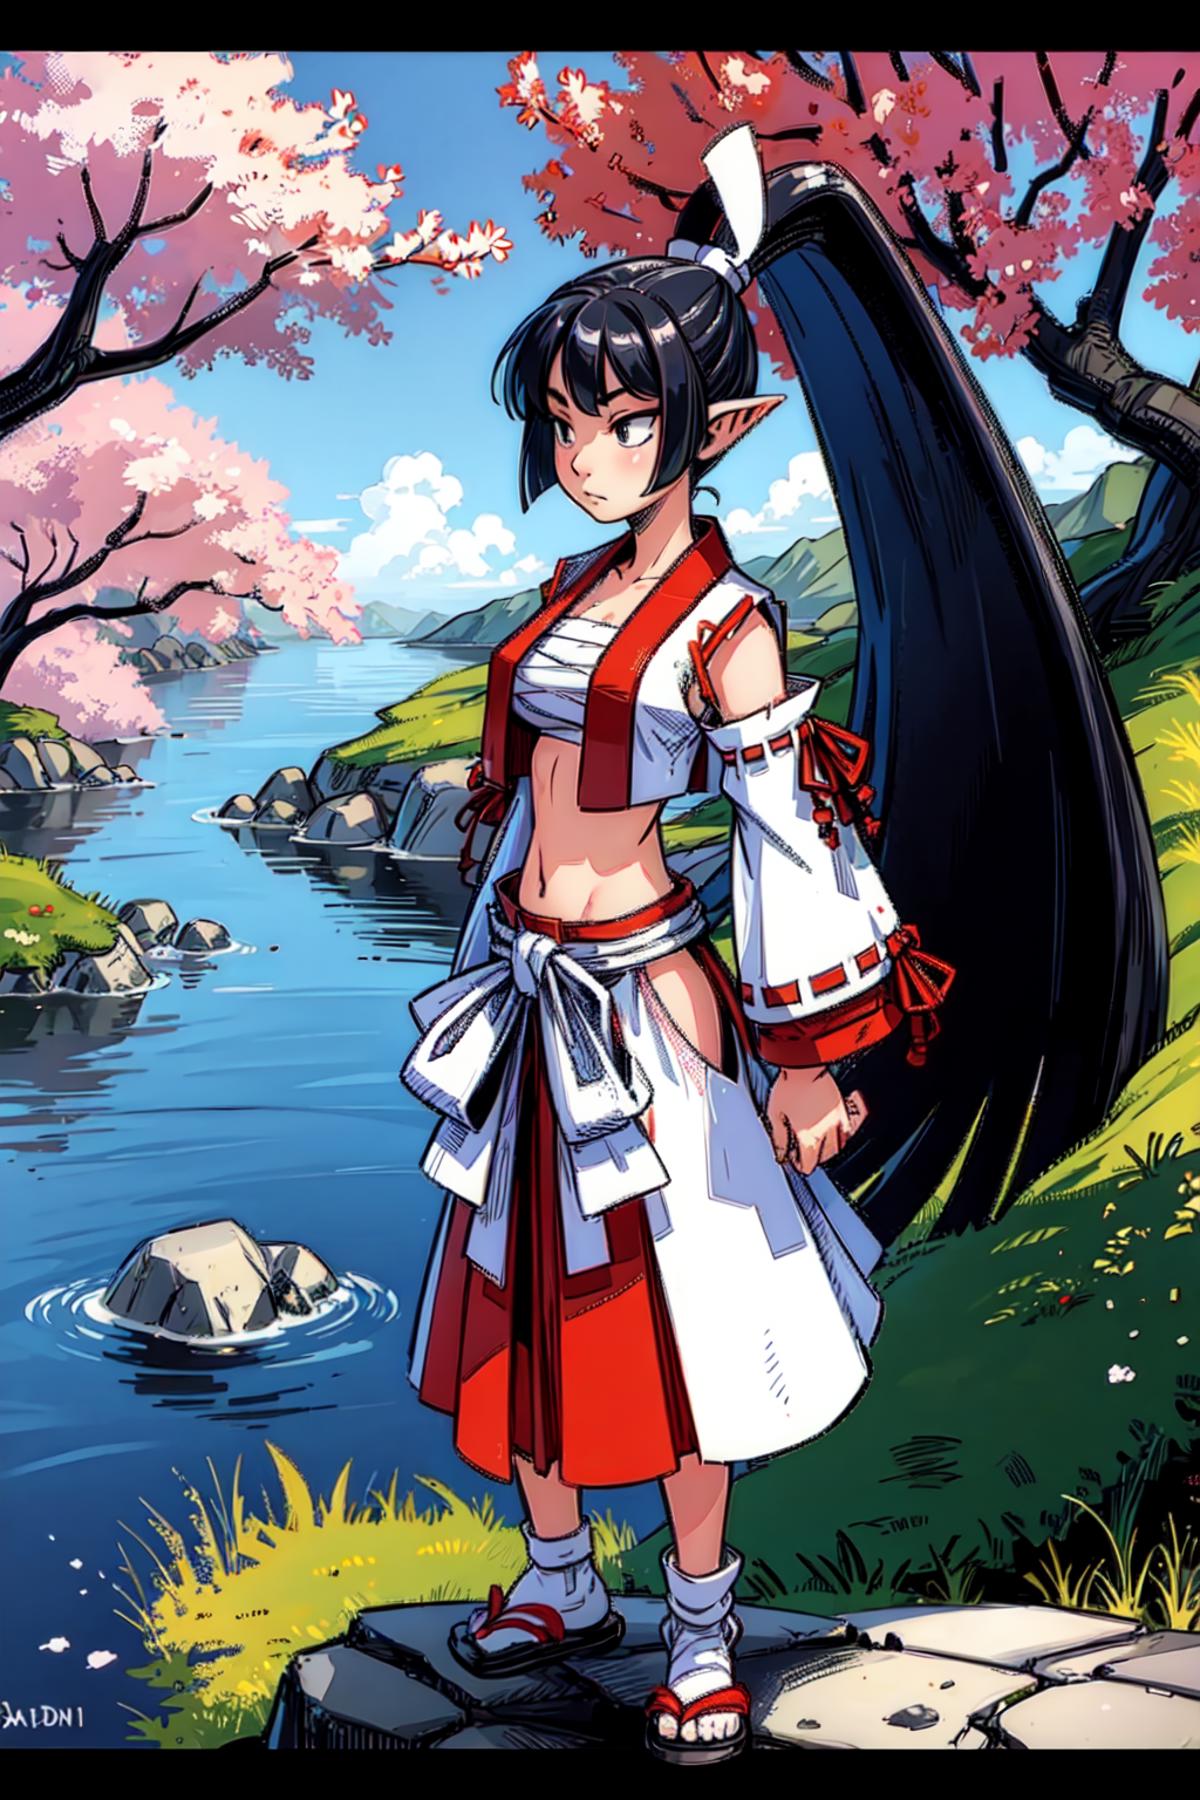 Lady Samurai - Disgaea image by Kayako